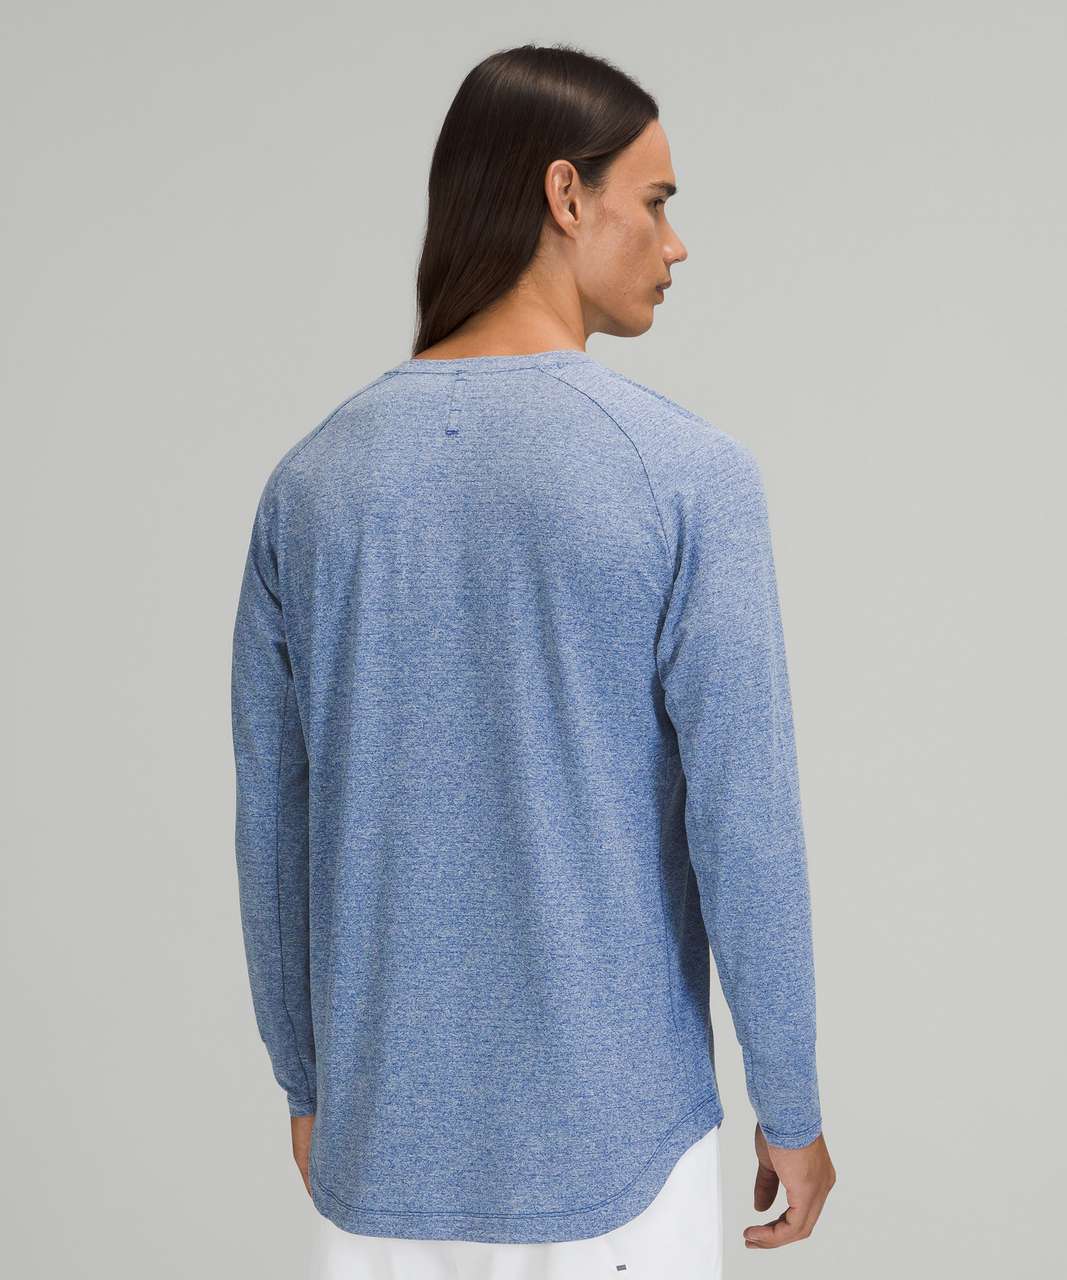 Lululemon Drysense Long Sleeve Shirt - Heathered Regatta Blue